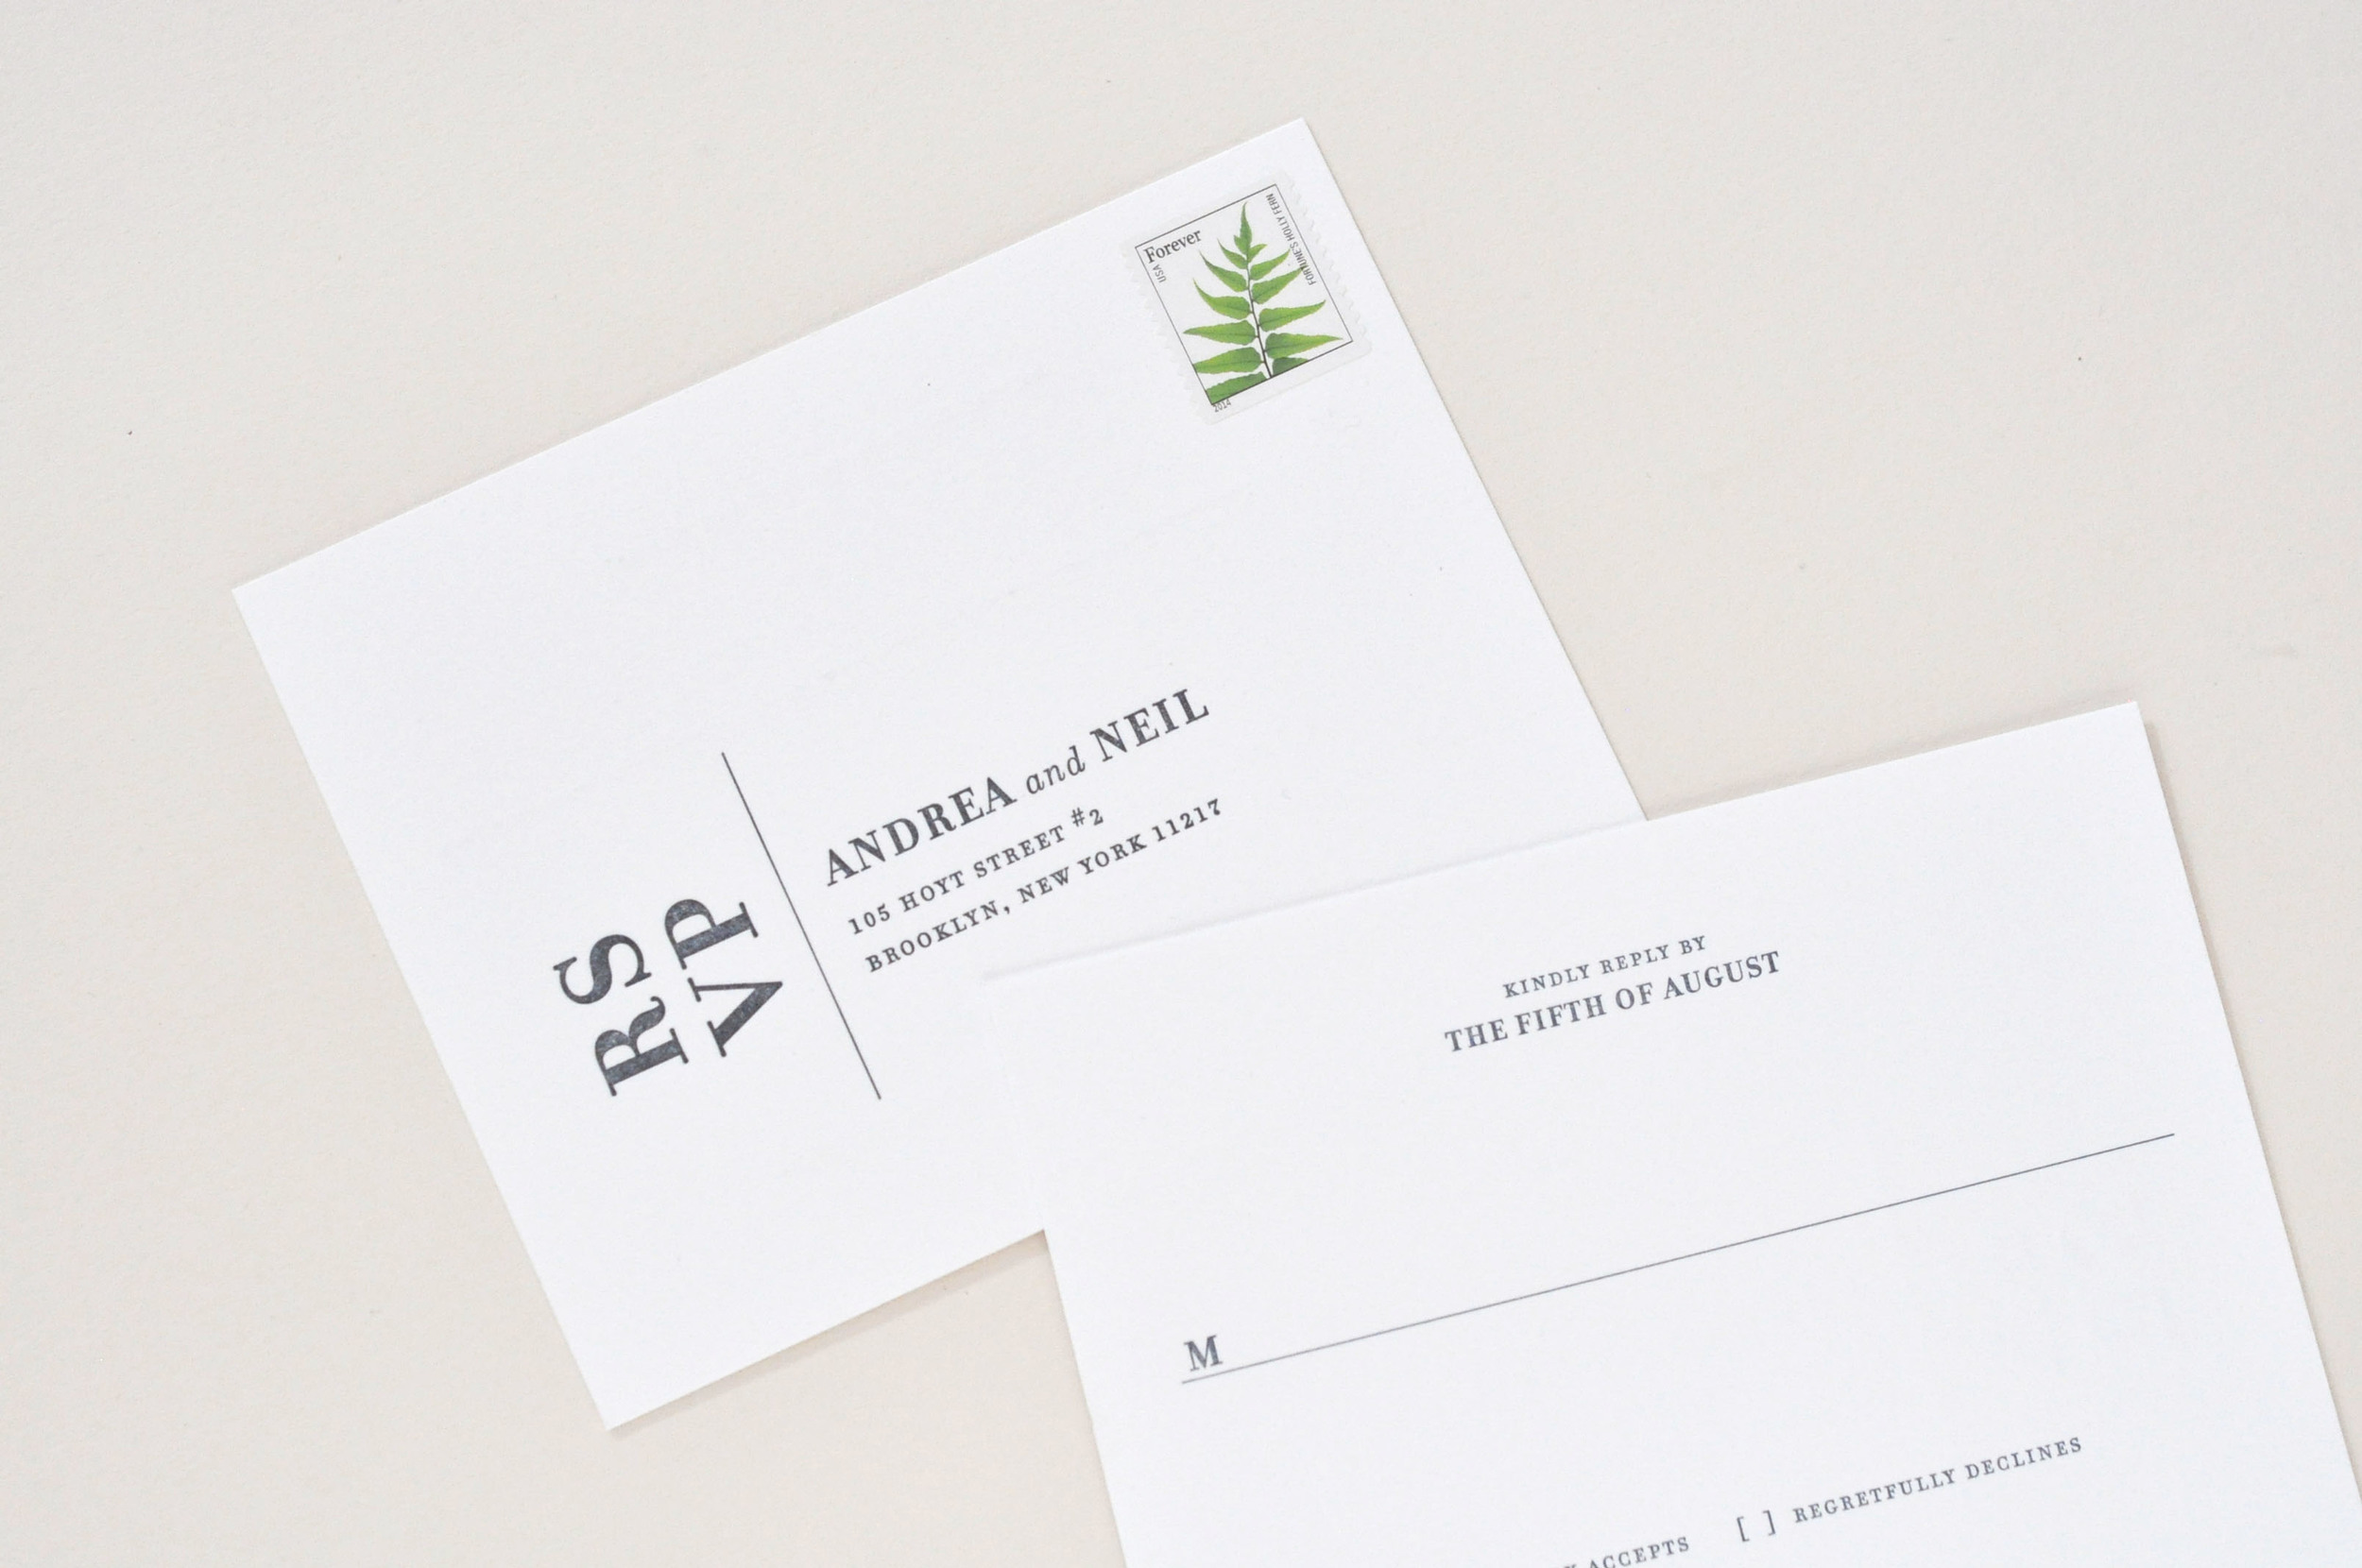 Andrea & Neil Wedding Invitation / Paper & Type.